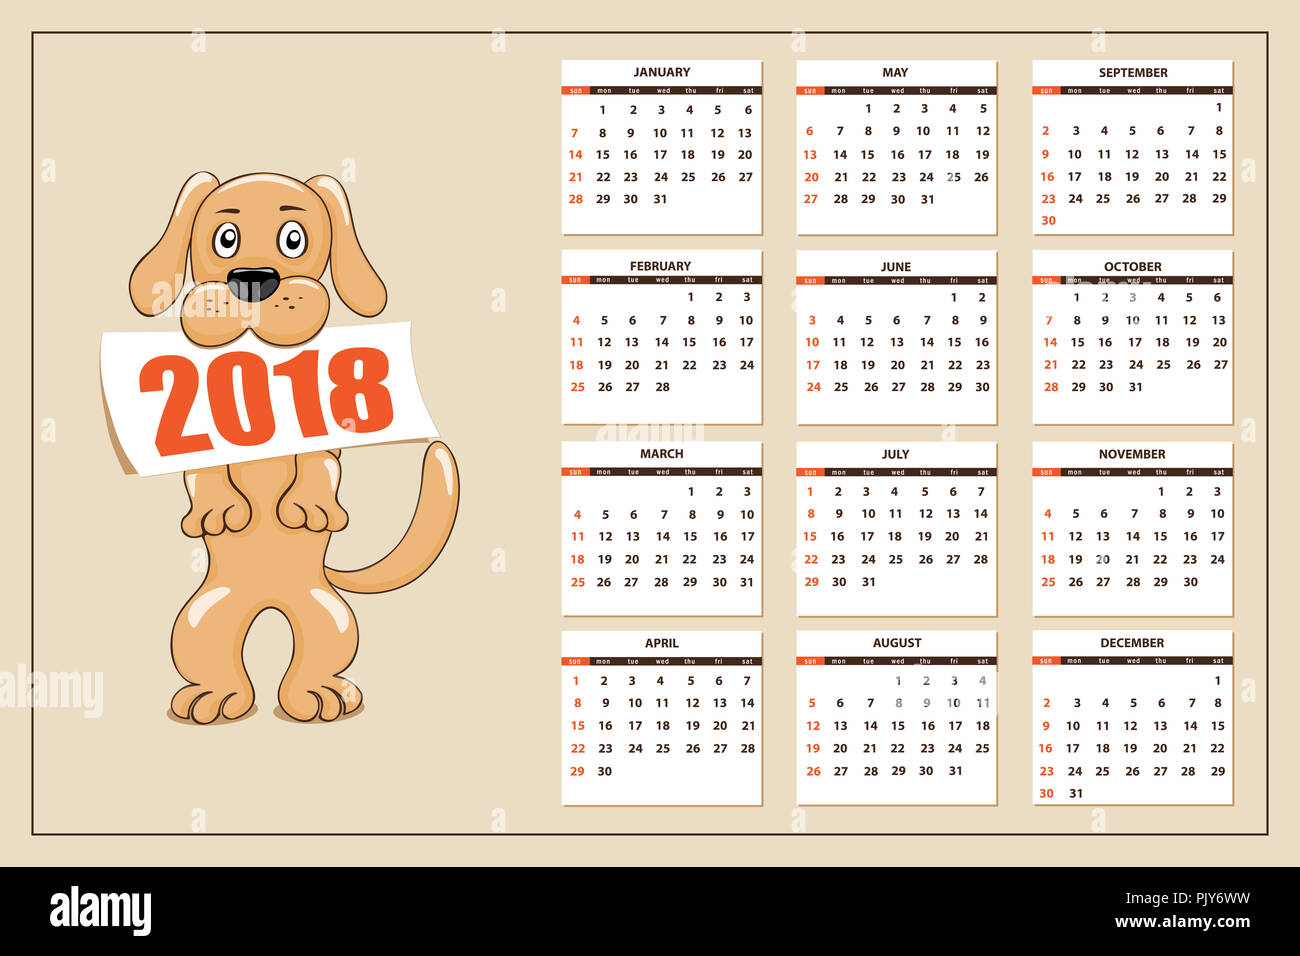 Pocket 2-year calendar planner 2017/2018 Organizer Appointment Book Funny Dog 